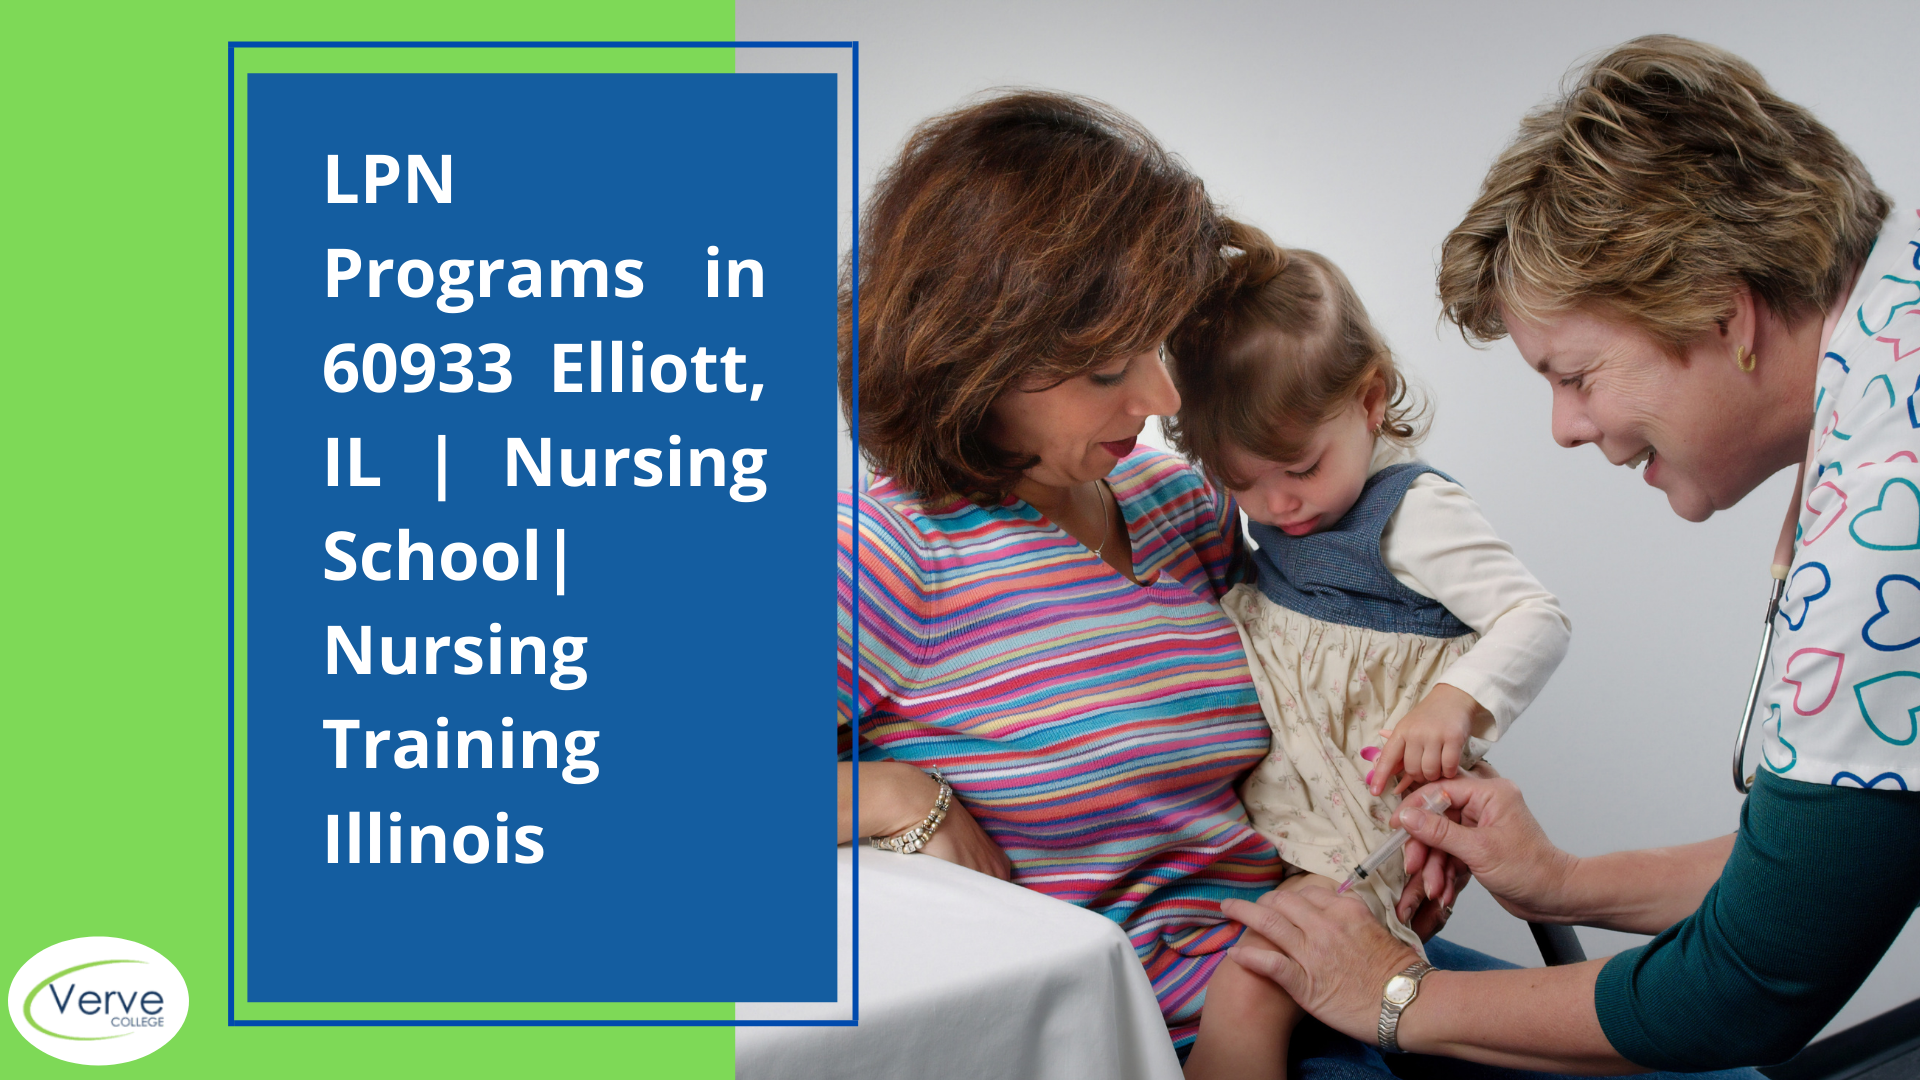 LPN Programs in 60933 Elliott, IL | Nursing School | Nursing Training Illinois